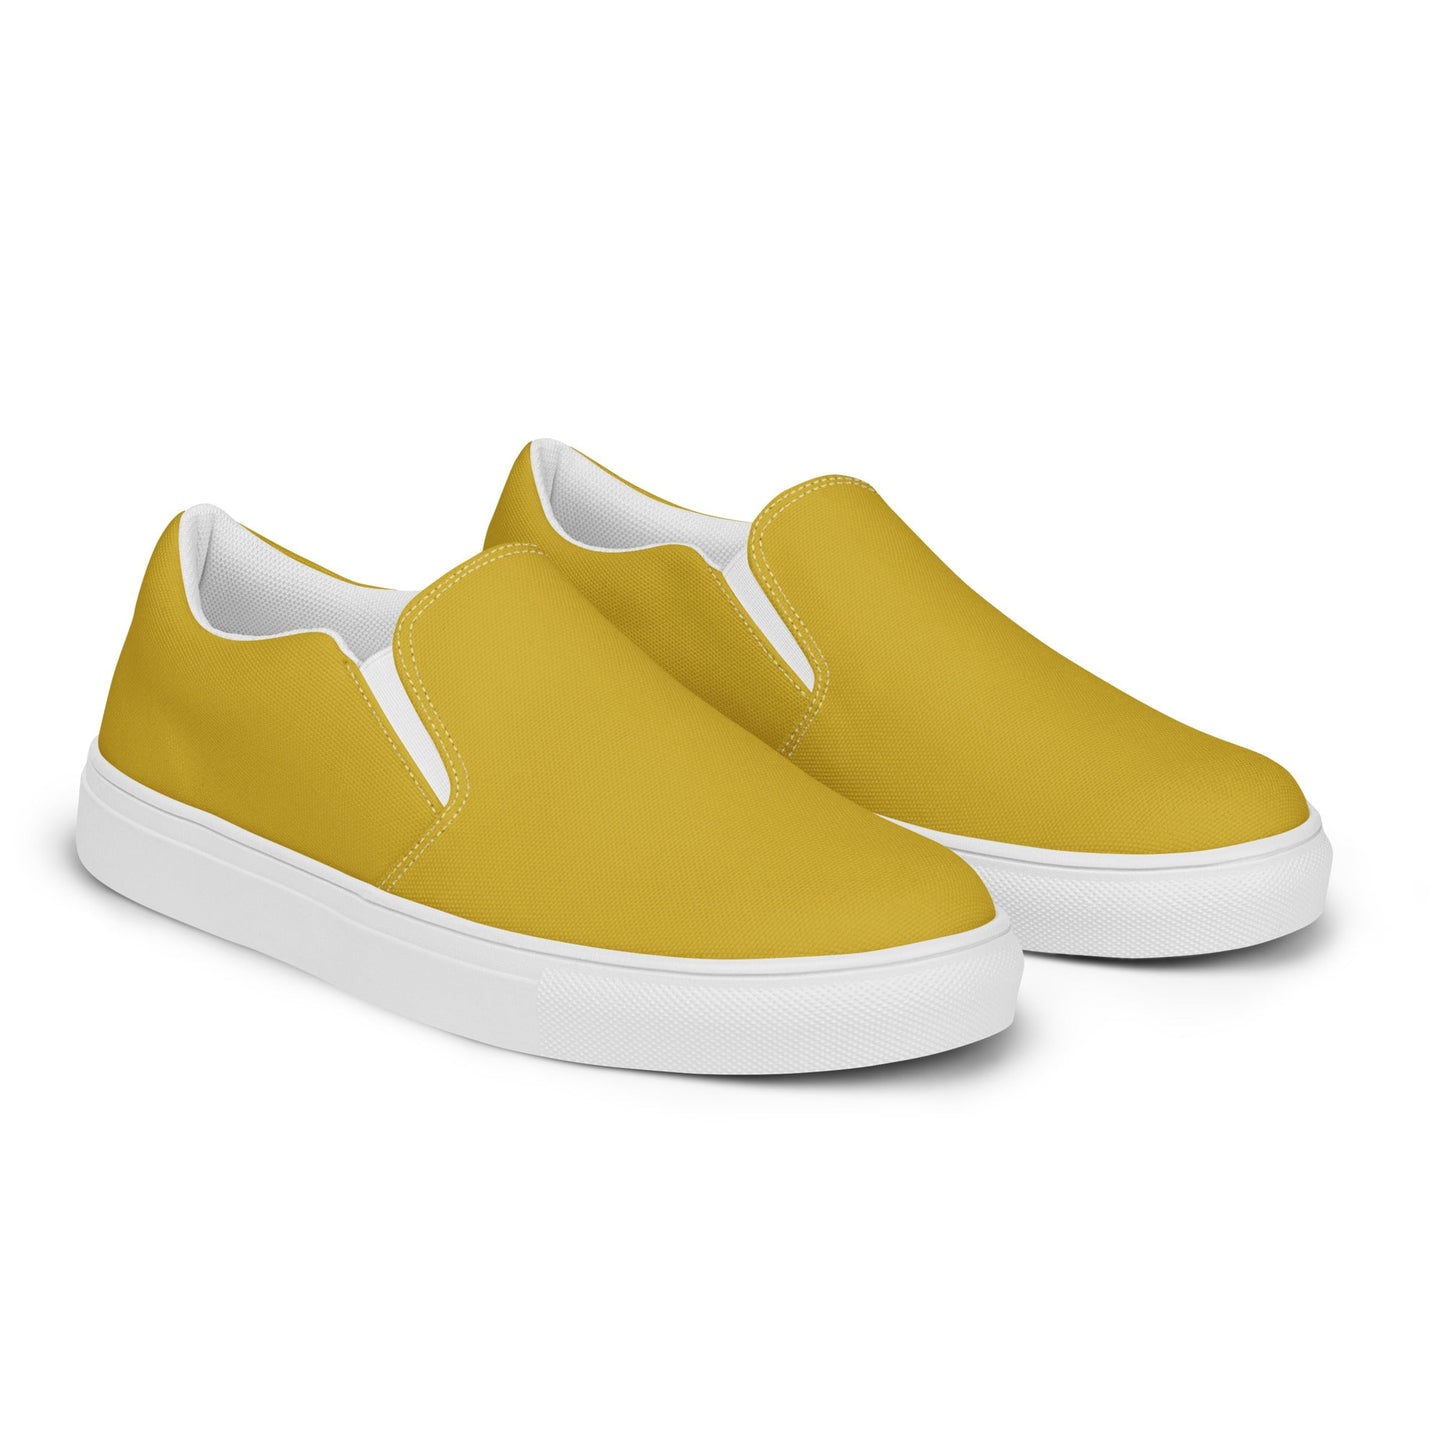 klasneakers Women’s slip-on canvas shoes - Gold